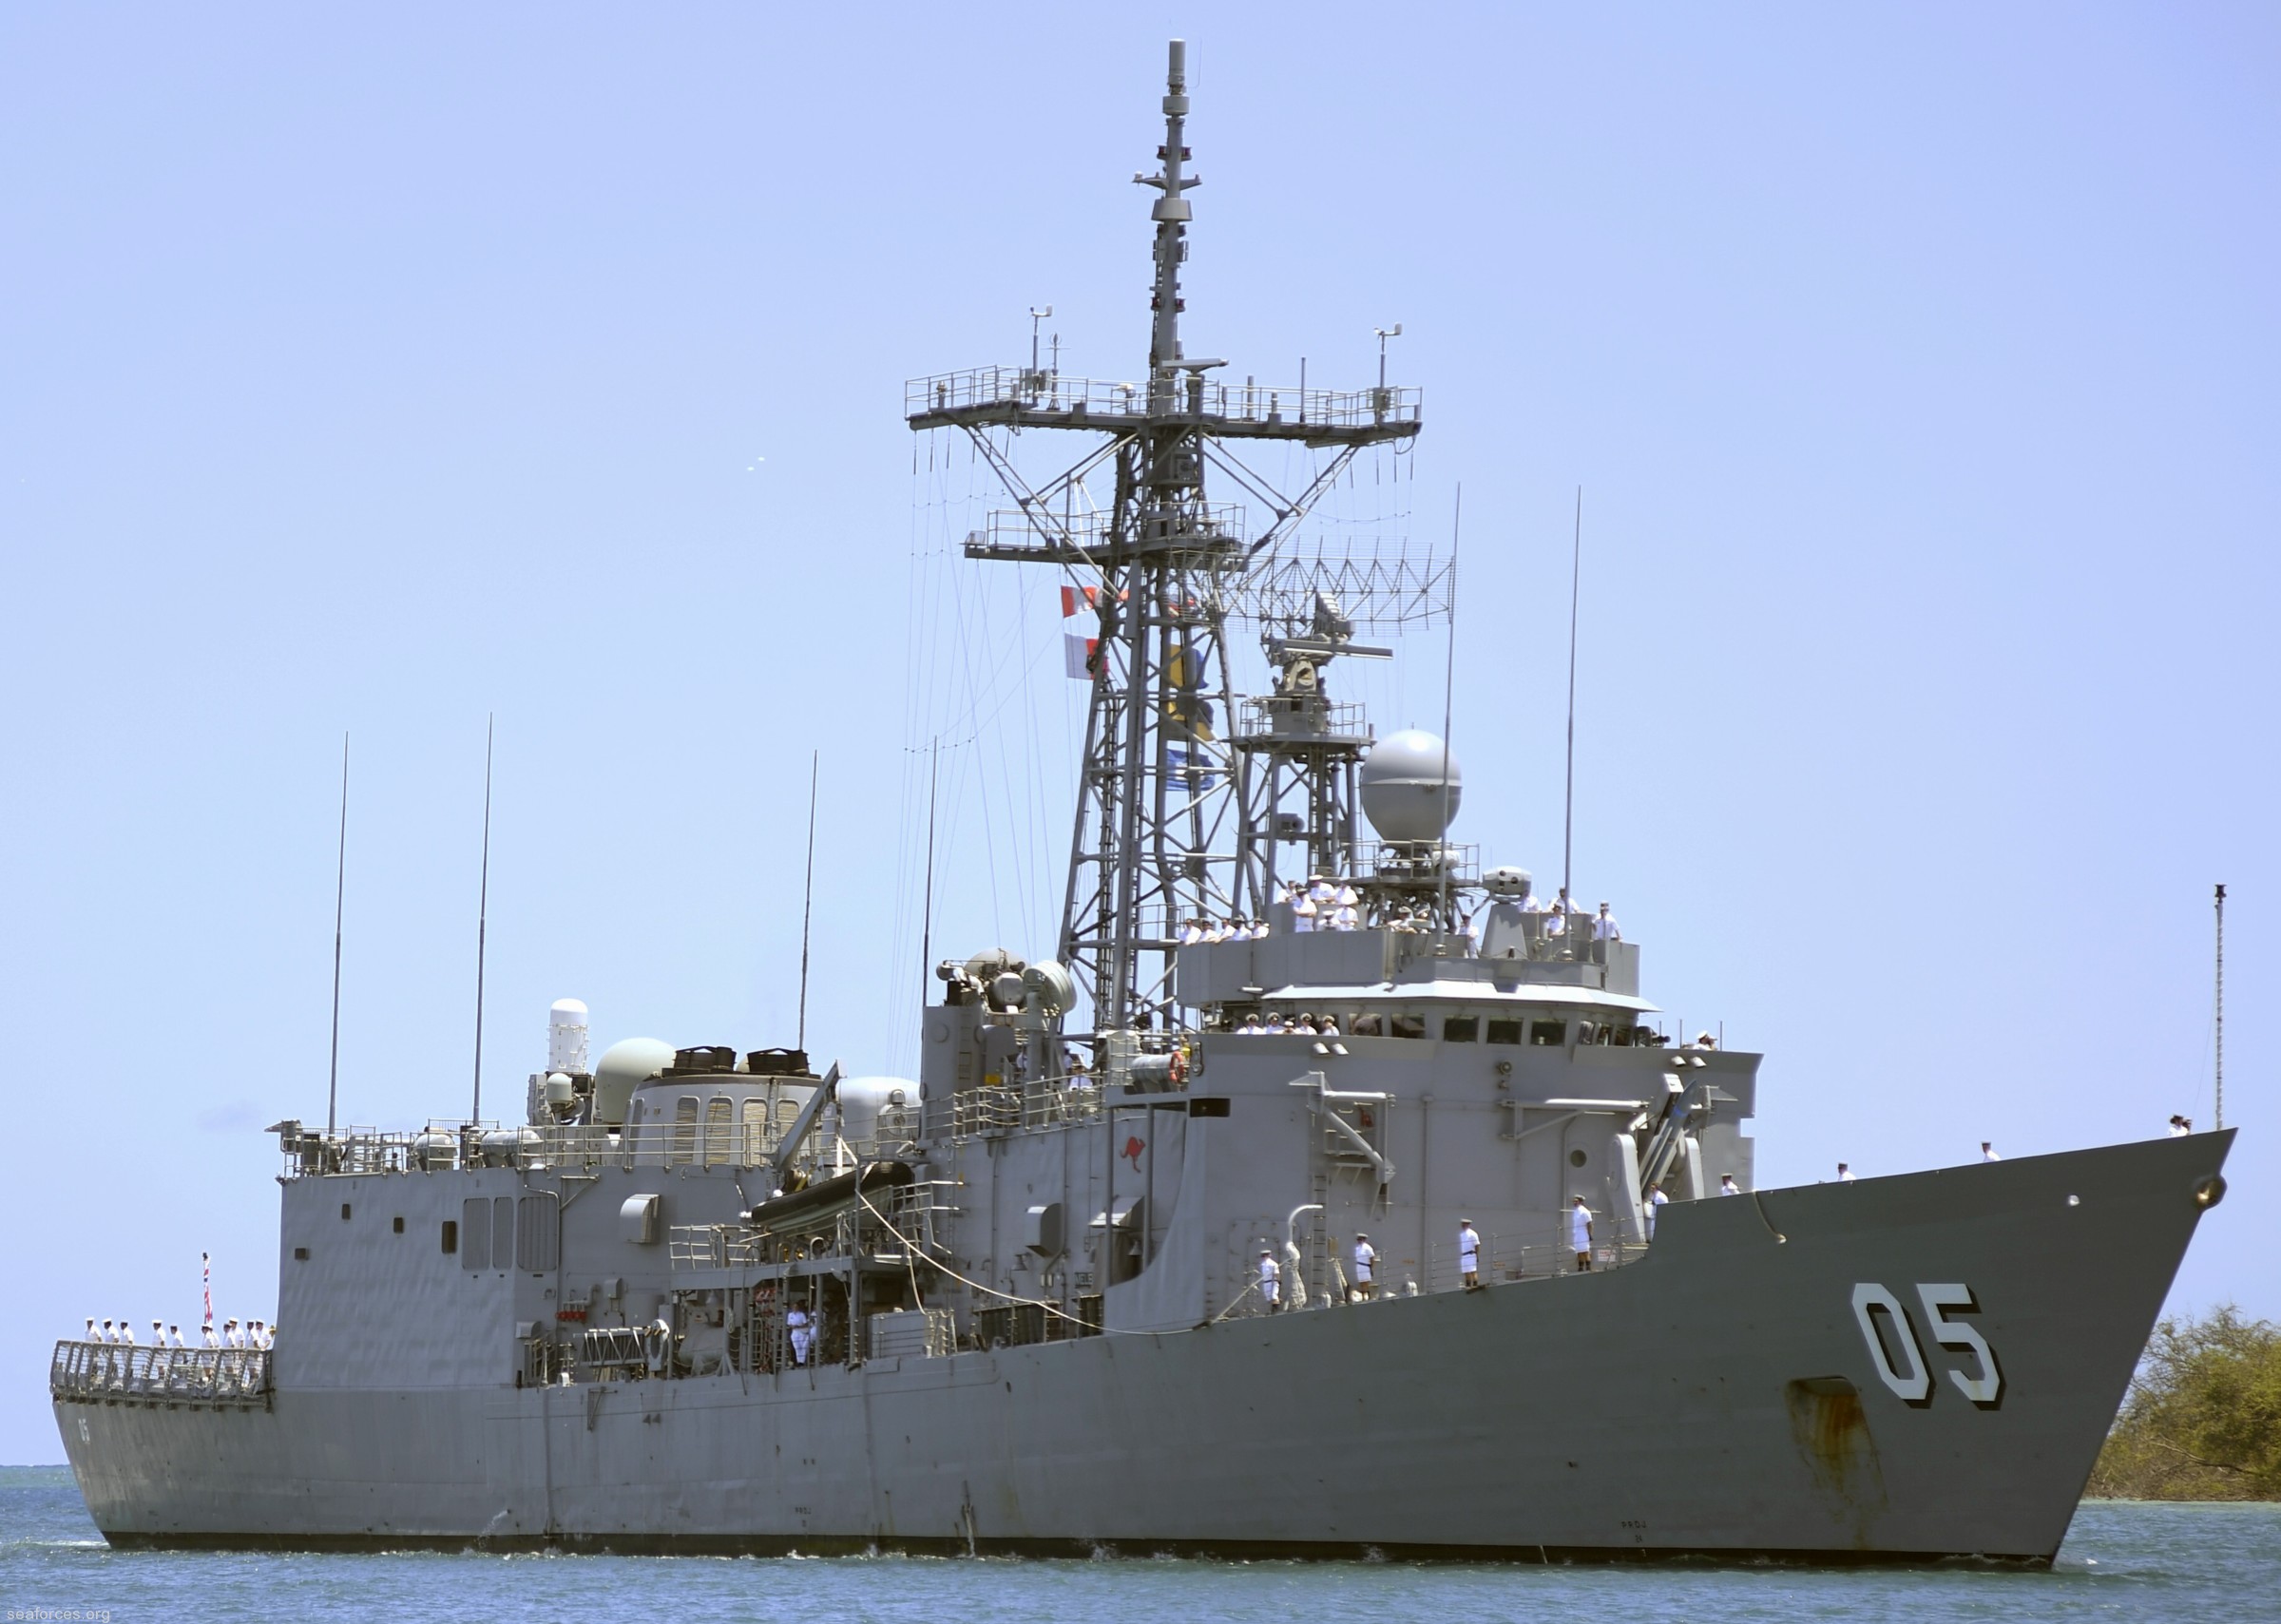 ffg-05 hmas melbourne adelaide class frigate royal australian navy 07 pearl harbor hawaii